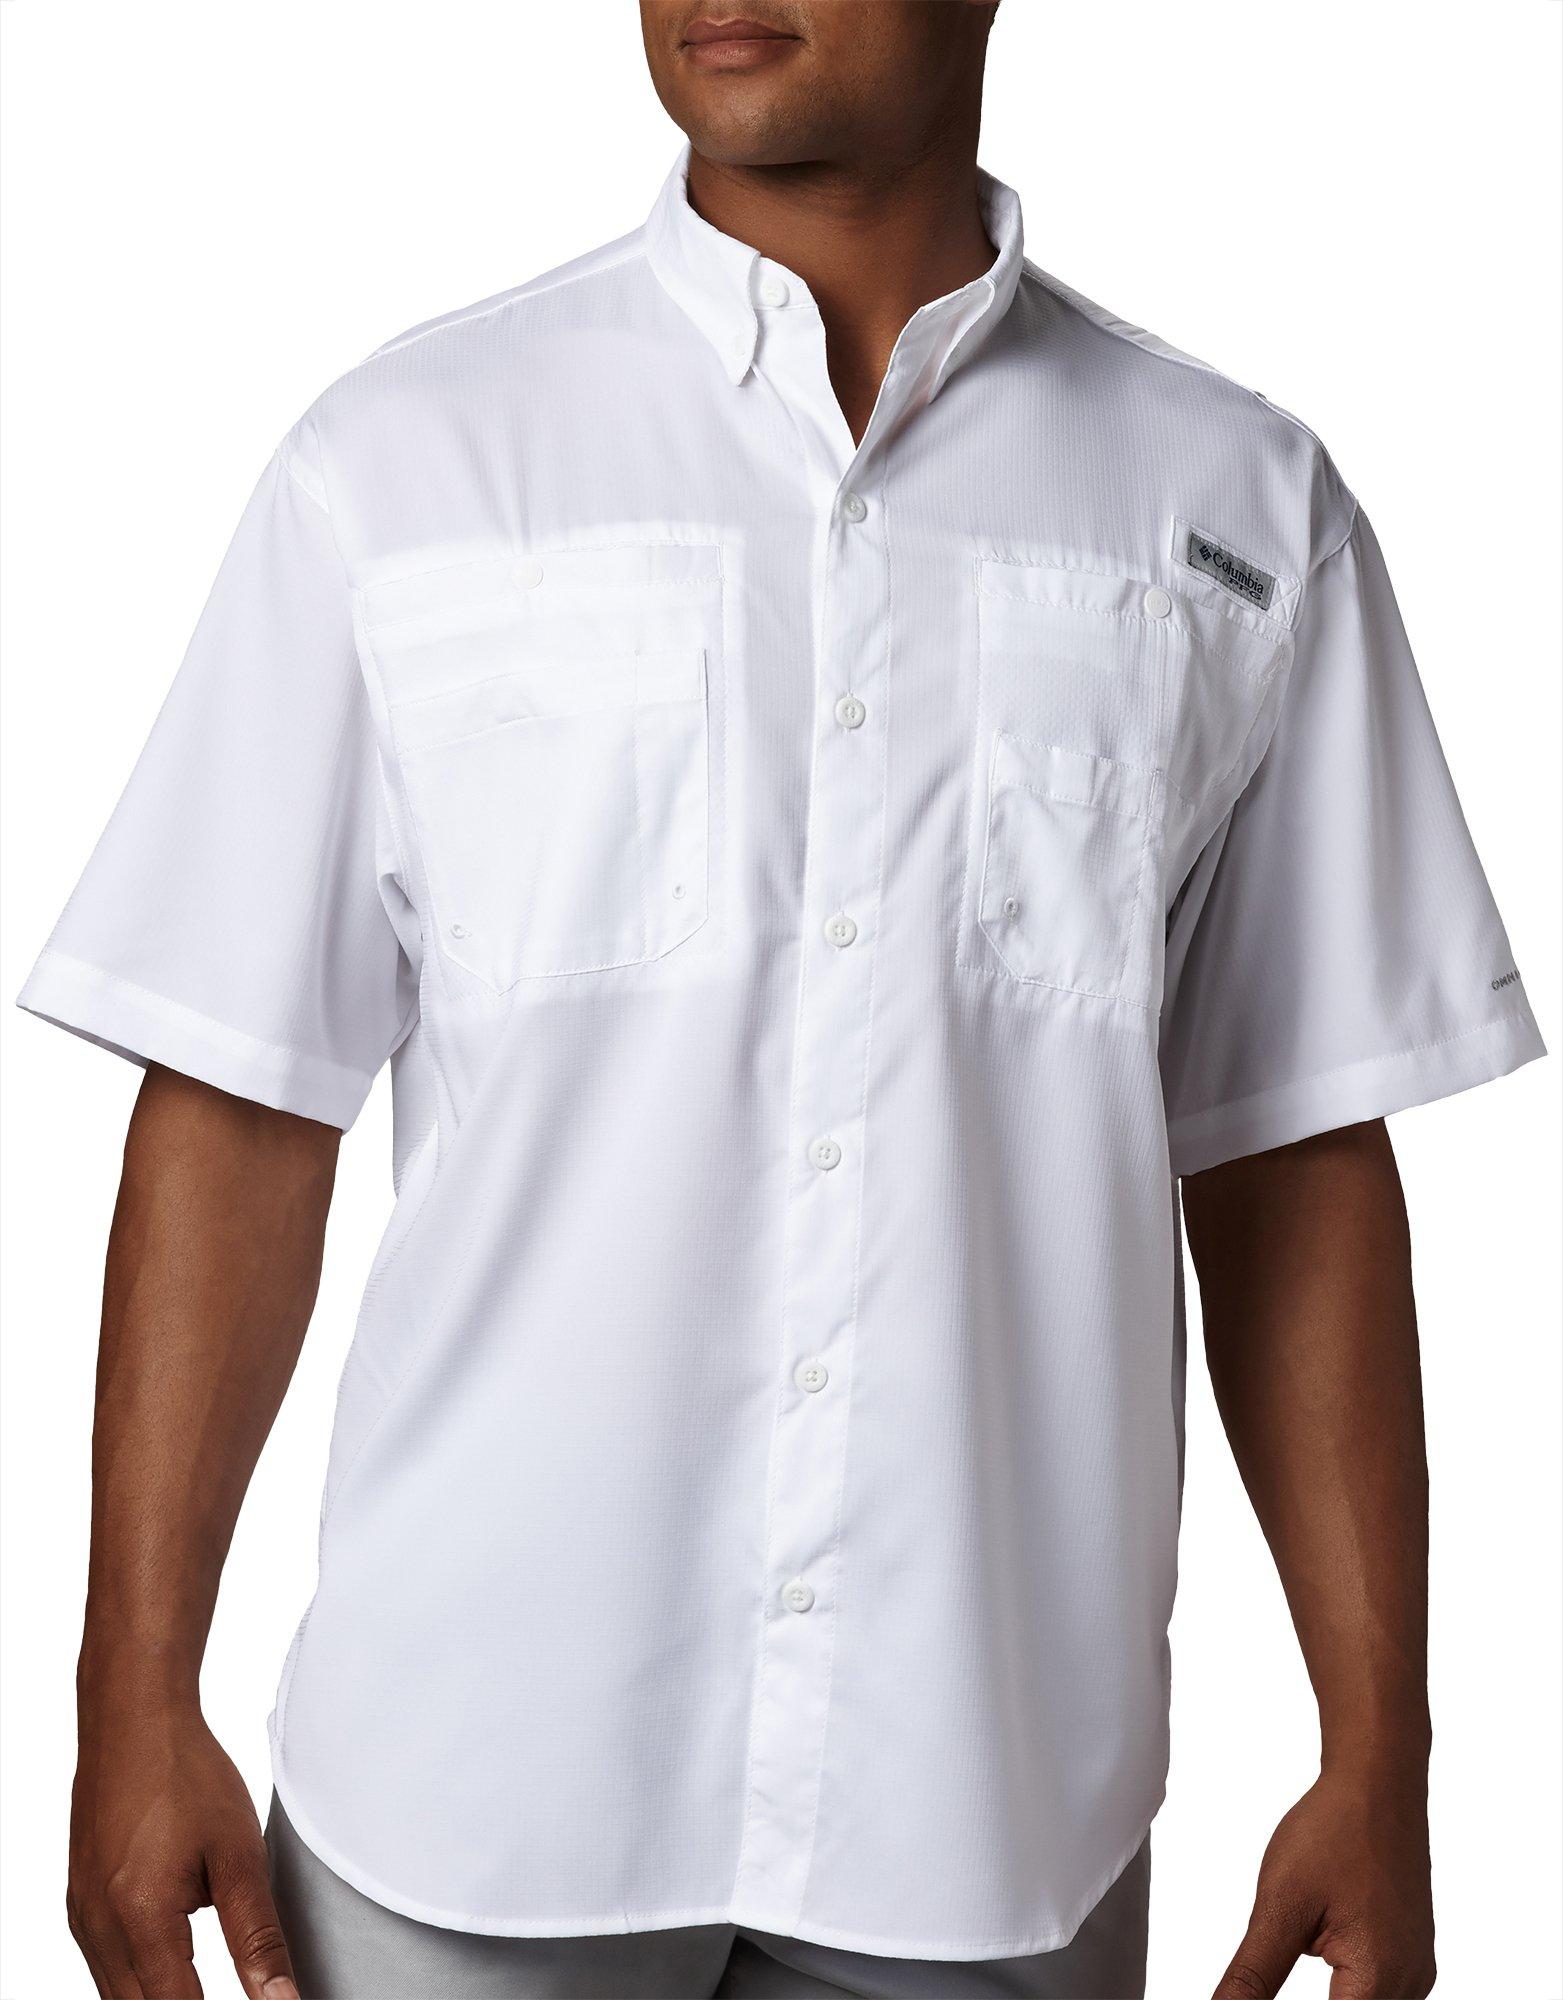 Columbia Tamiami II Short-Sleeve Shirt for Men - White - 2XL